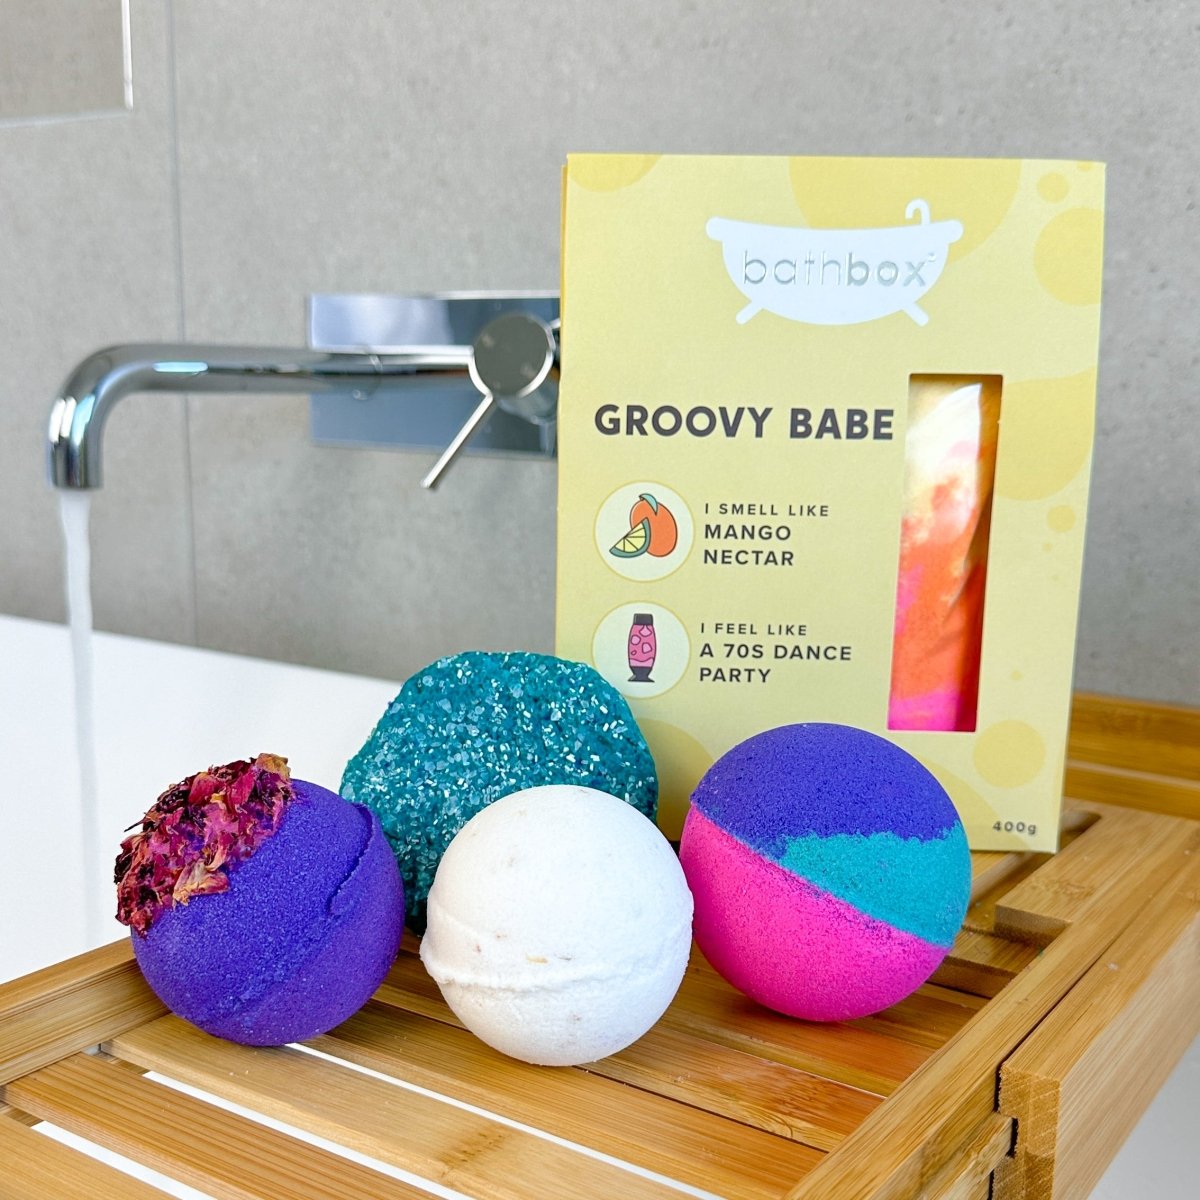 The Best Sellers Bath Gift Set with Bath Pillow & Bath Caddy, Bath Bombs, Bubble Bar & Dust - Made in Australia by Bath Box